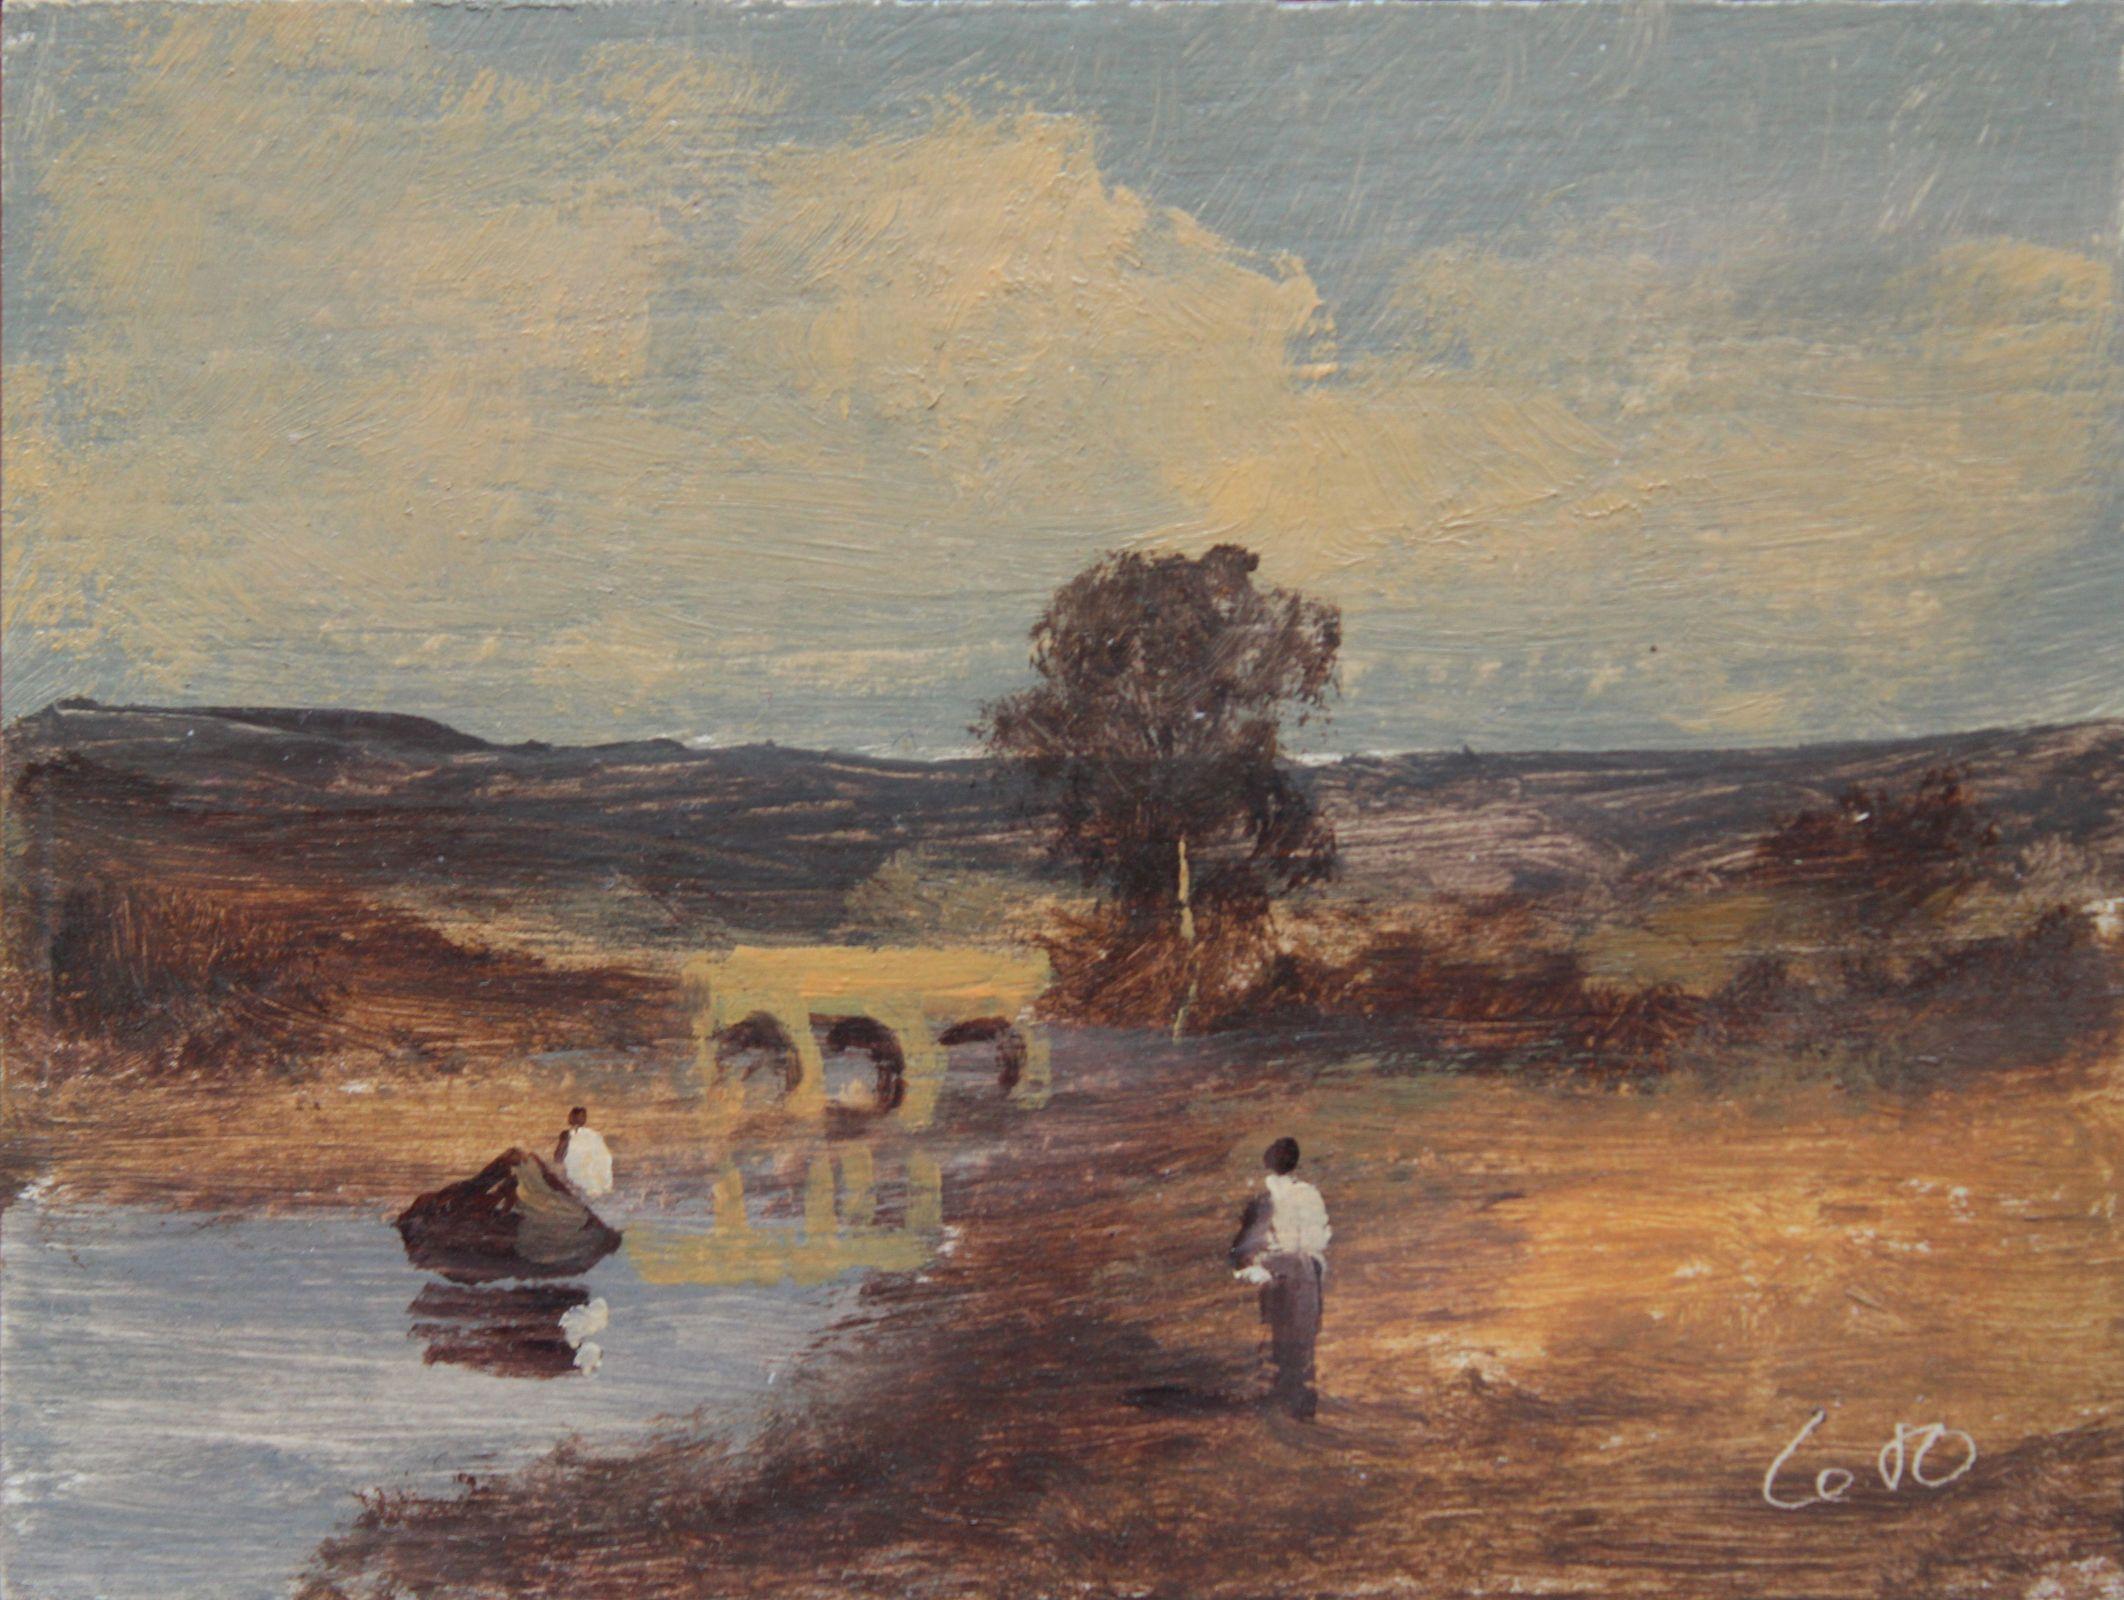 Antonio Leto Landscape Painting - At the bridge. Cardboard, oil. 6.2x8 cm